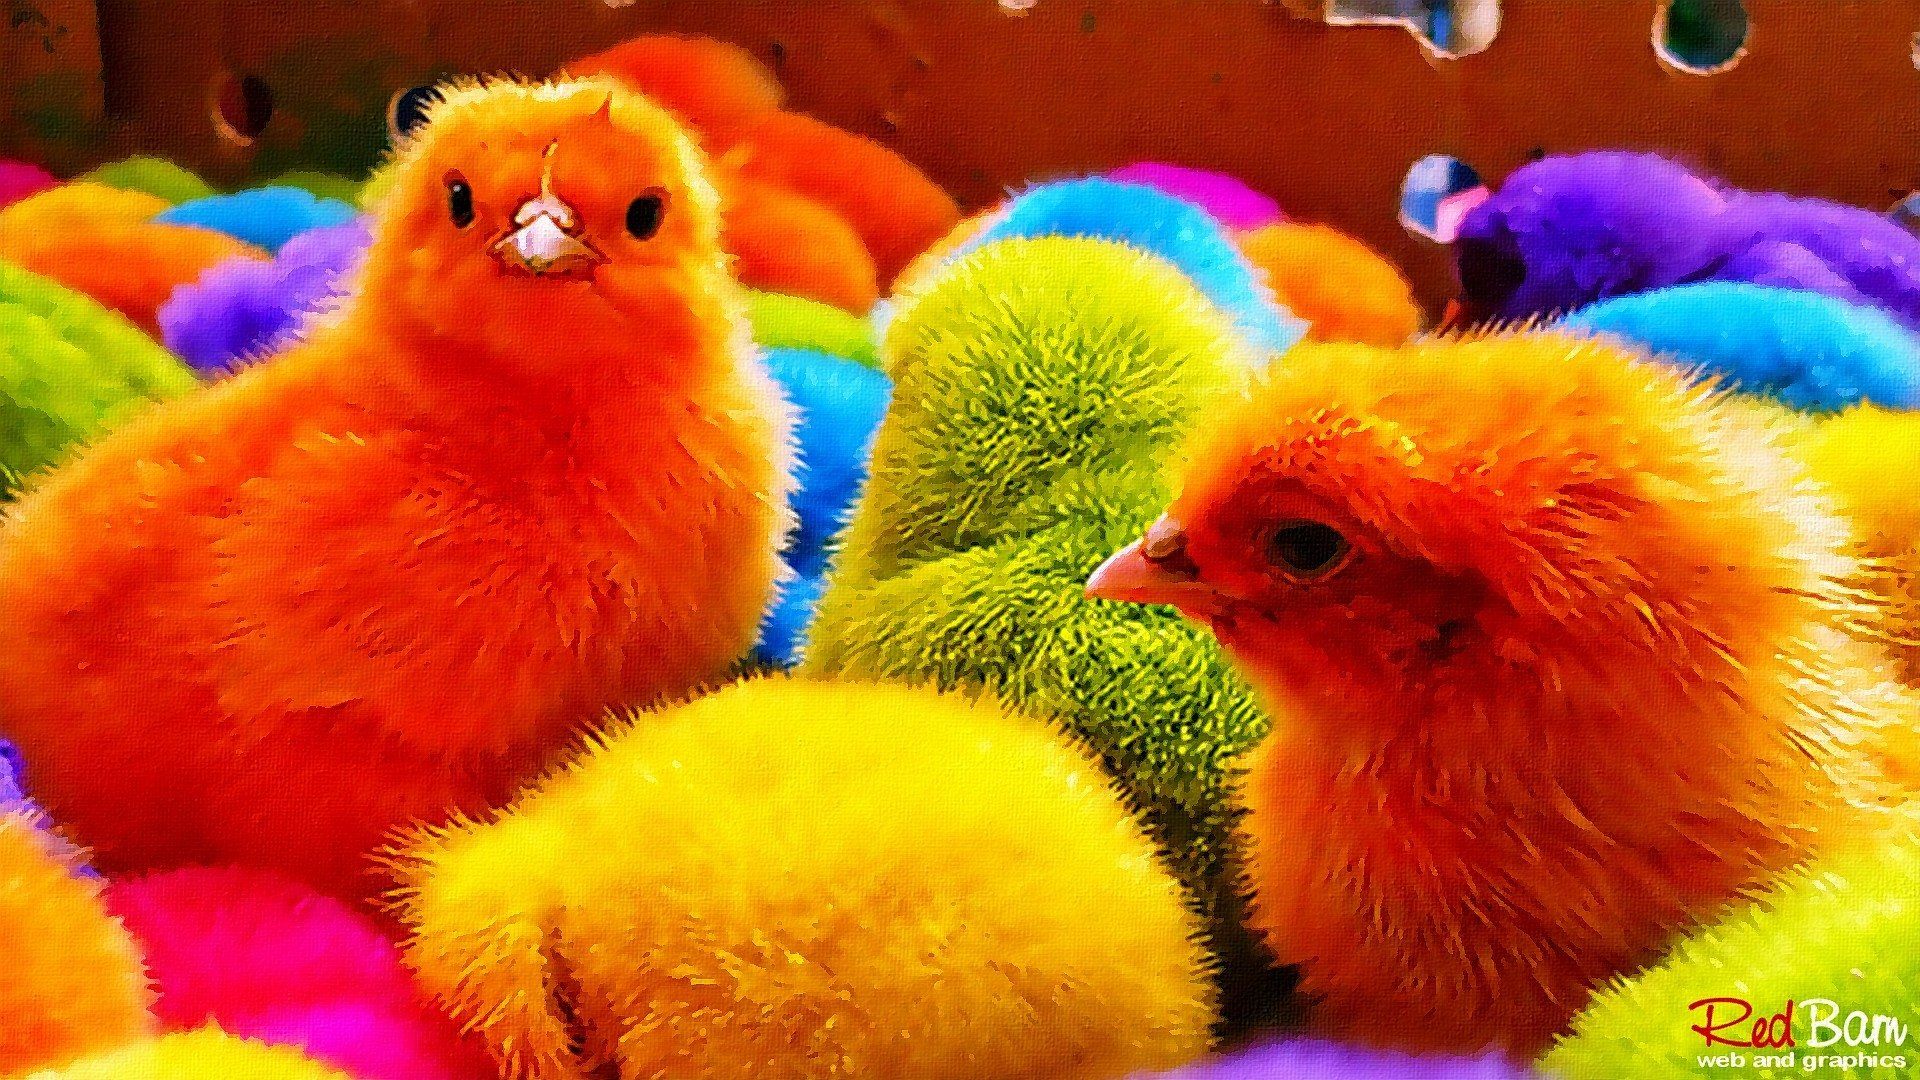 Multi coloured Free Range Chicks :-). Free range chickens, Red barn, Free range